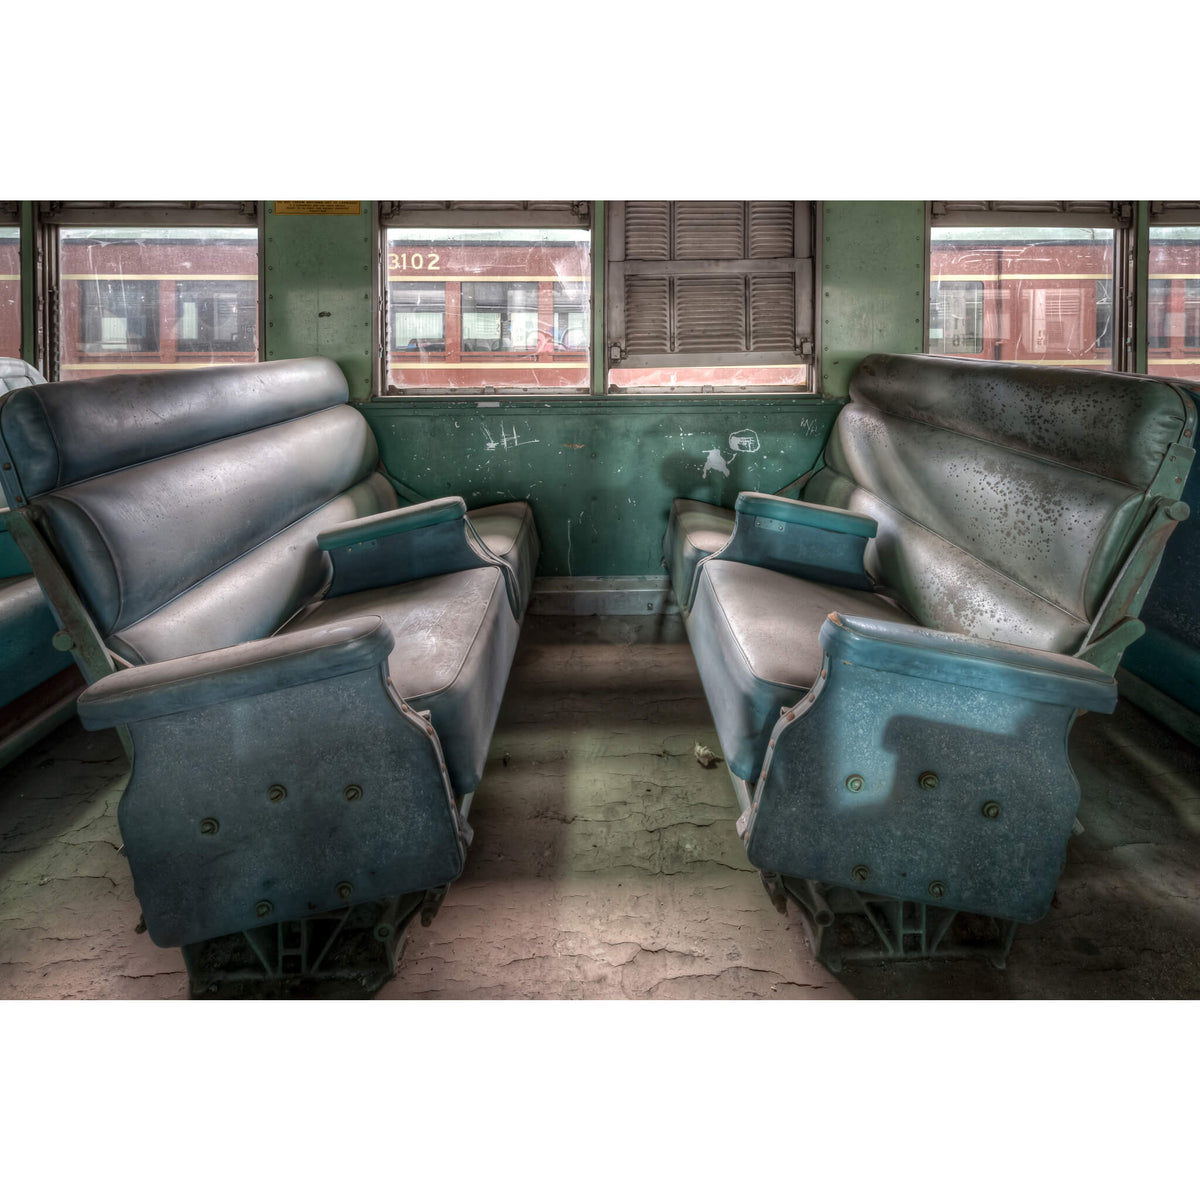 Interurban Passenger Seating | Eveleigh Paint Shop Fine Art Print - Lost Collective Shop